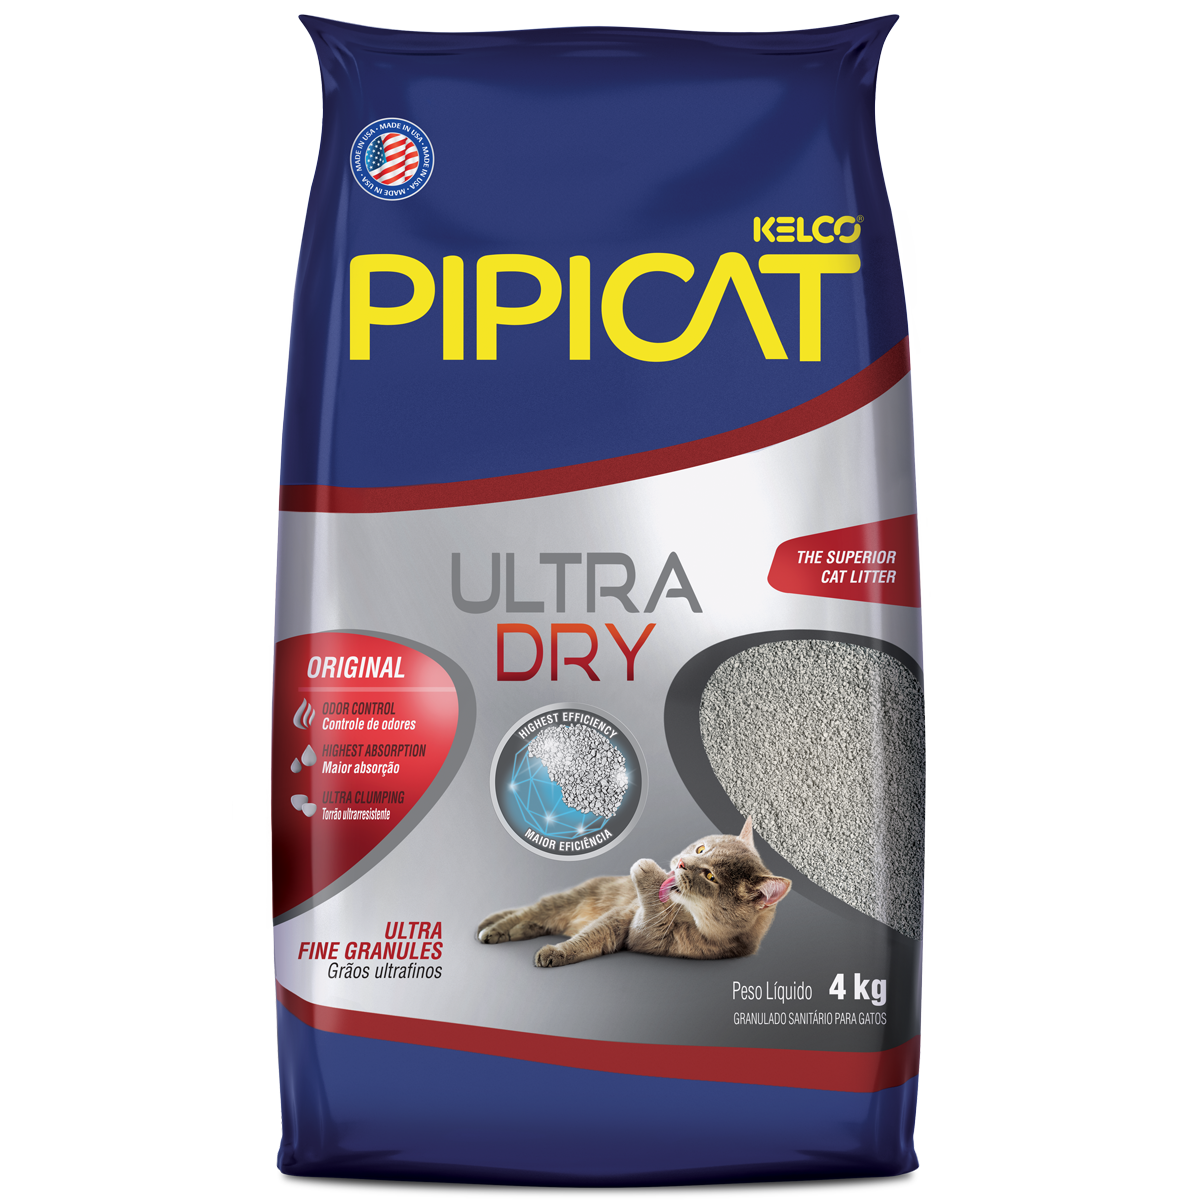 Pipicat Ultra Dry 4kg